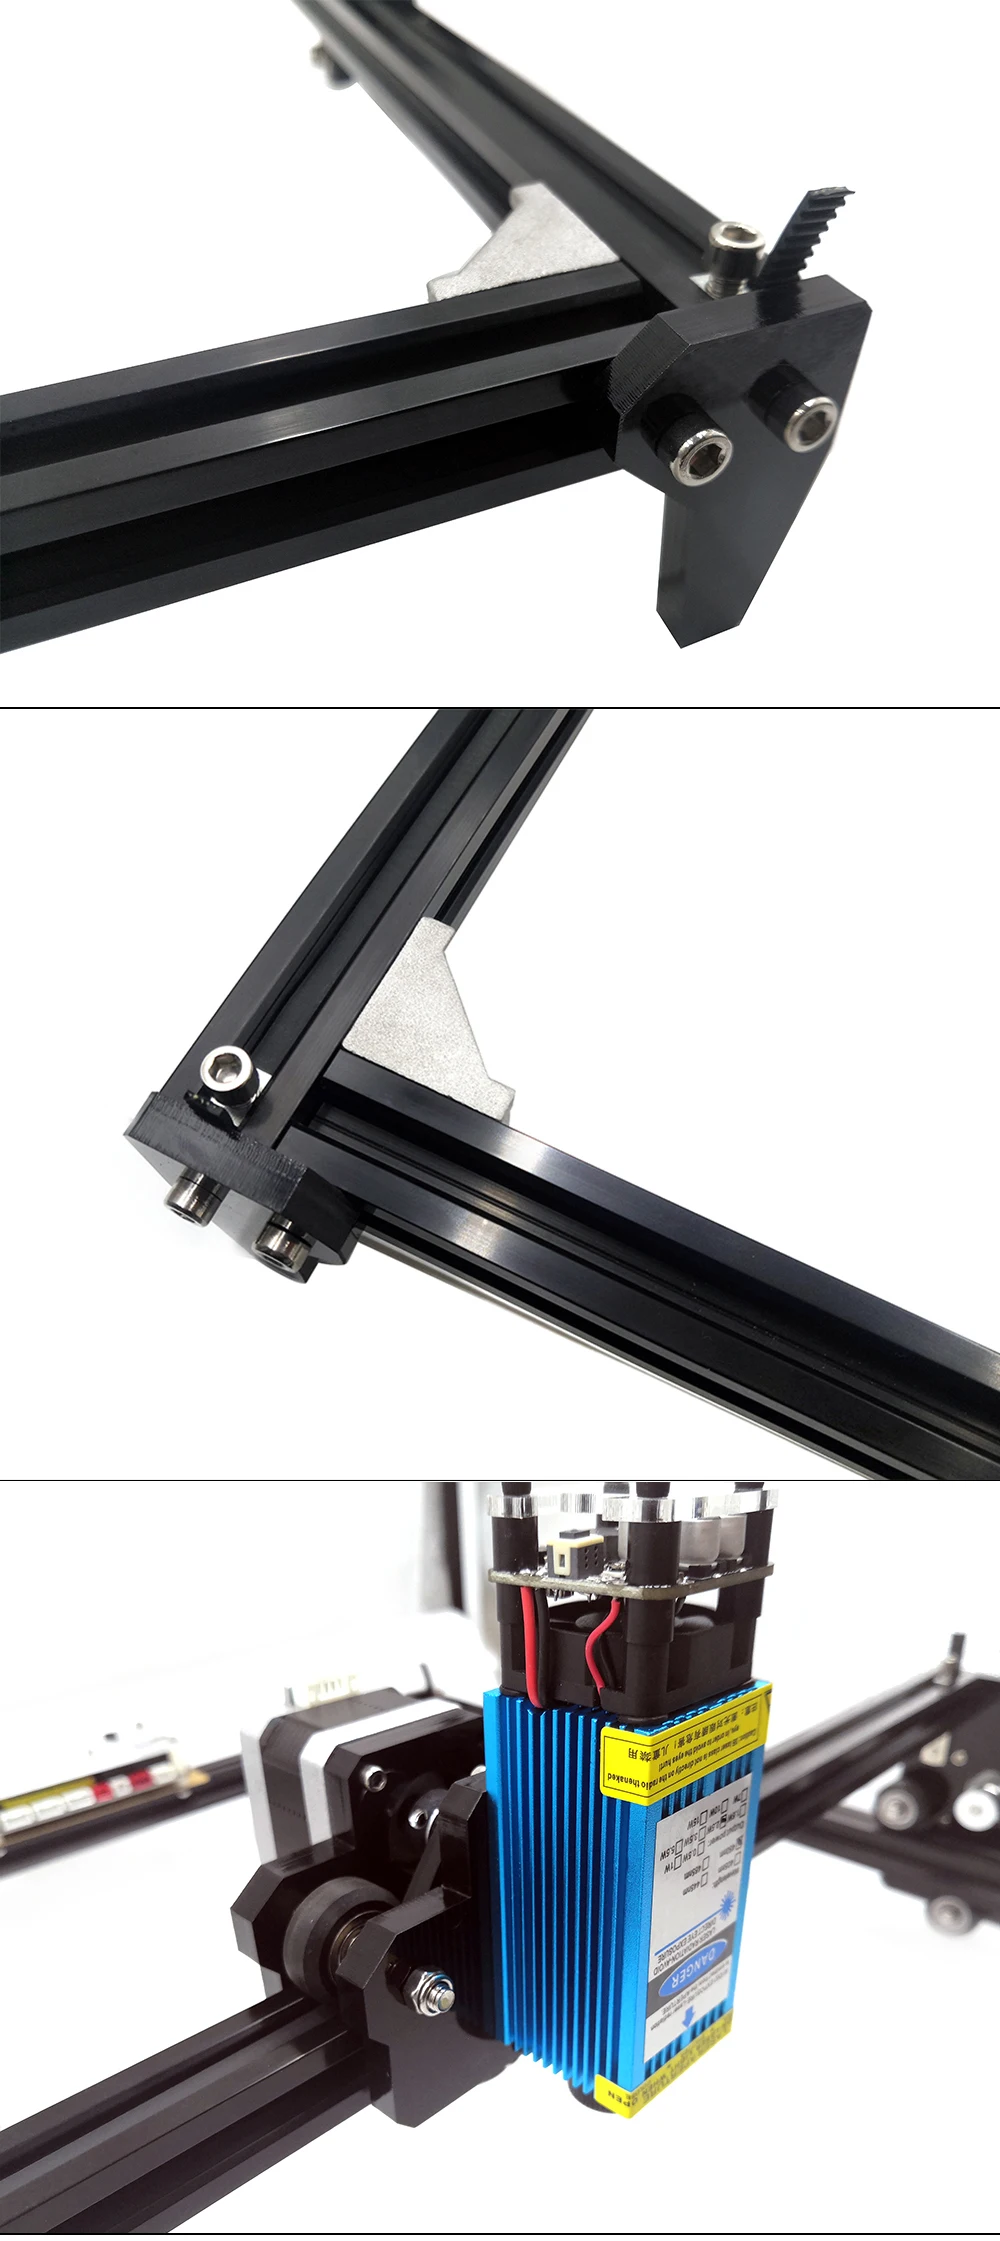 4050 CNC Laser DIY 15W Engraver Desktop Wood Router